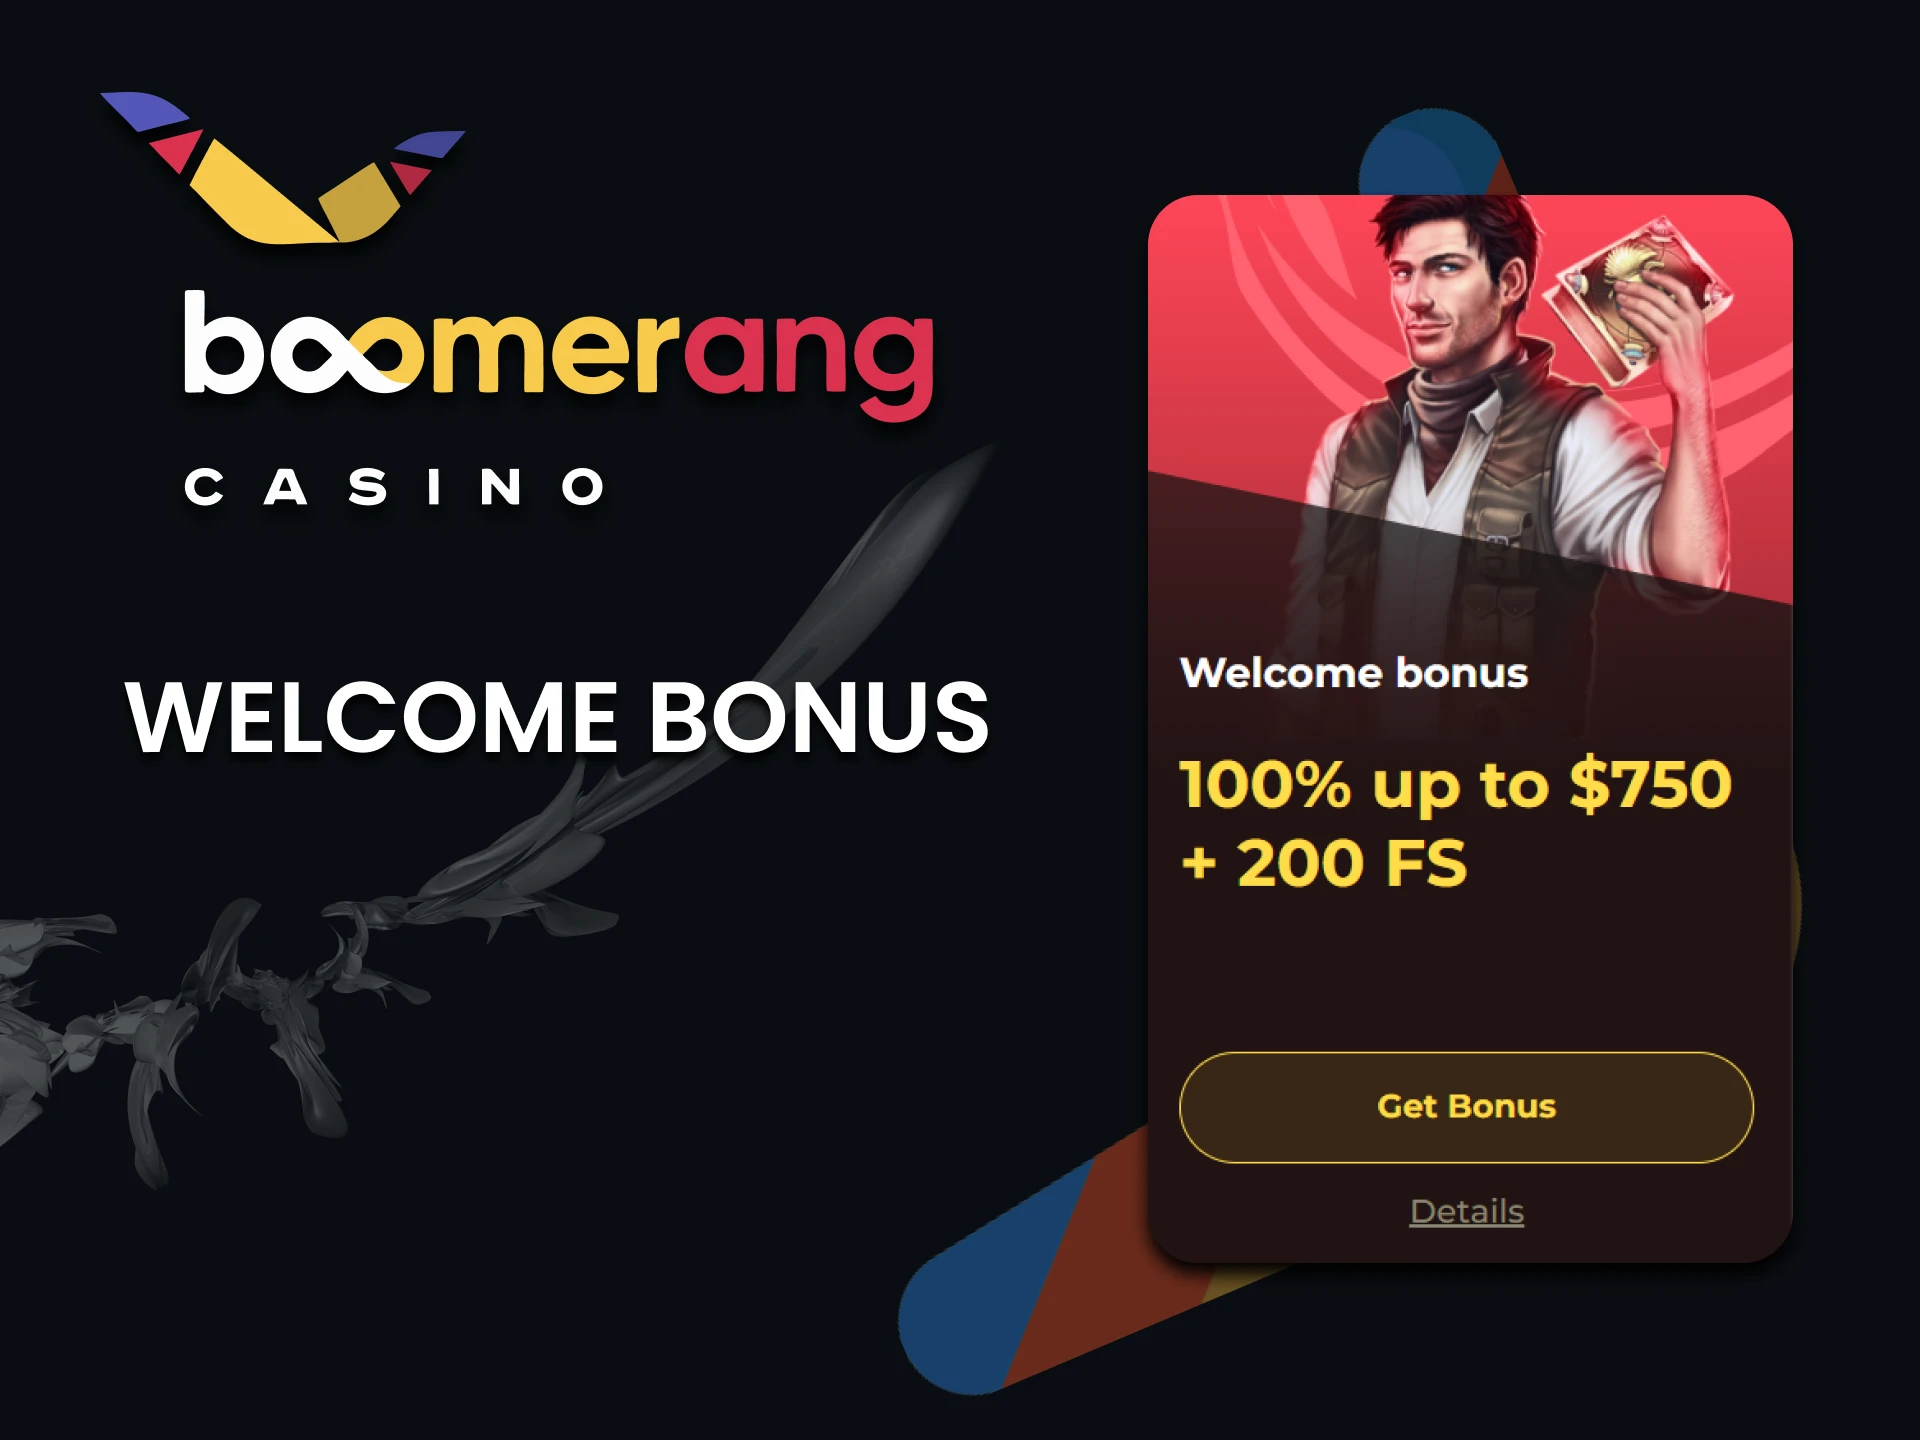 Get a welcome bonus from Boomerang Casino.